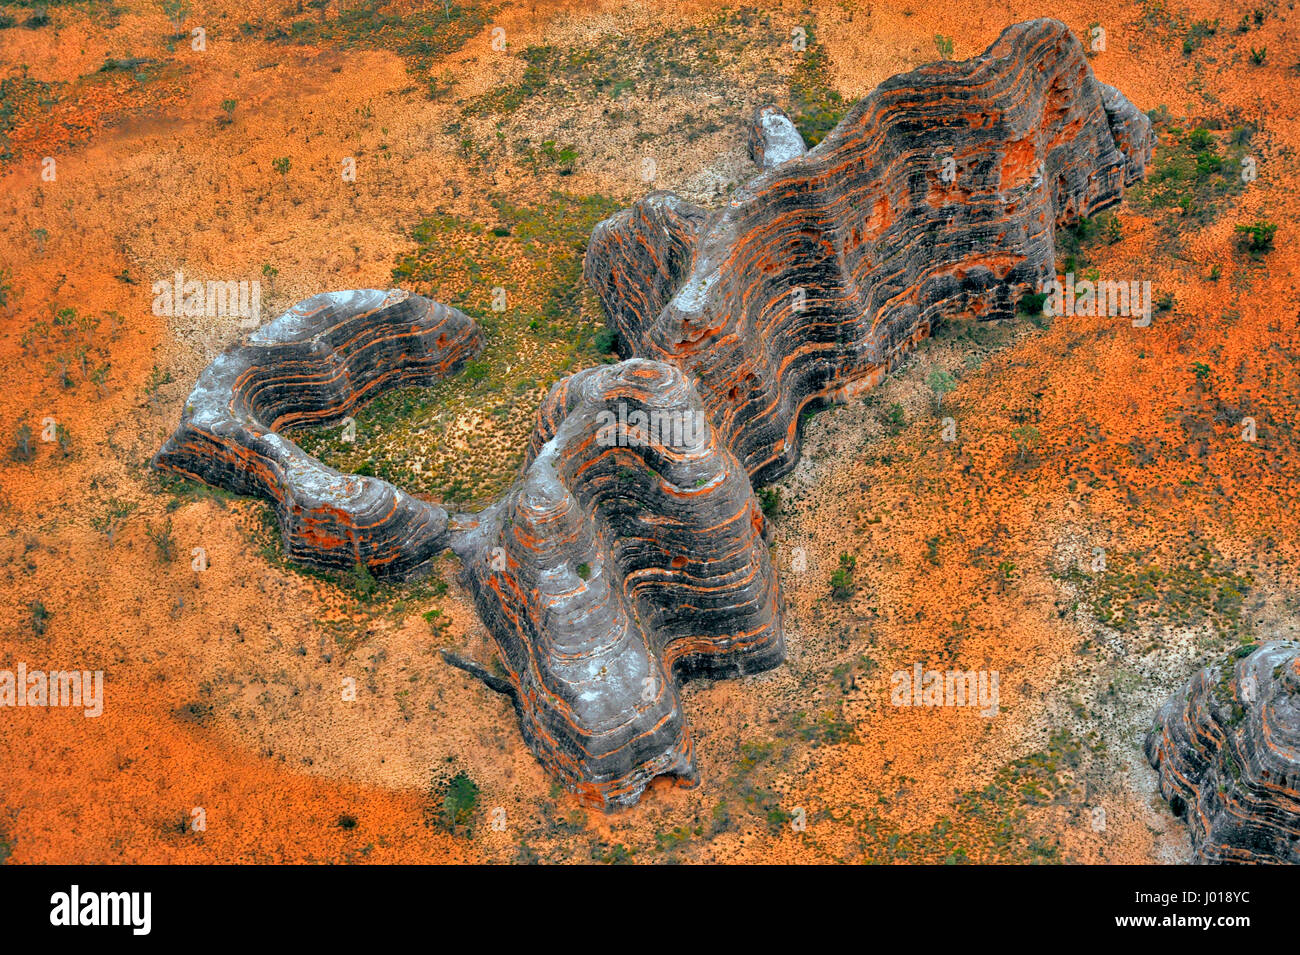 The red ochre rocks of the Bungle Bungle Range ( Purnululu National Park) in the Kimberley region of Western Australia. Stock Photo